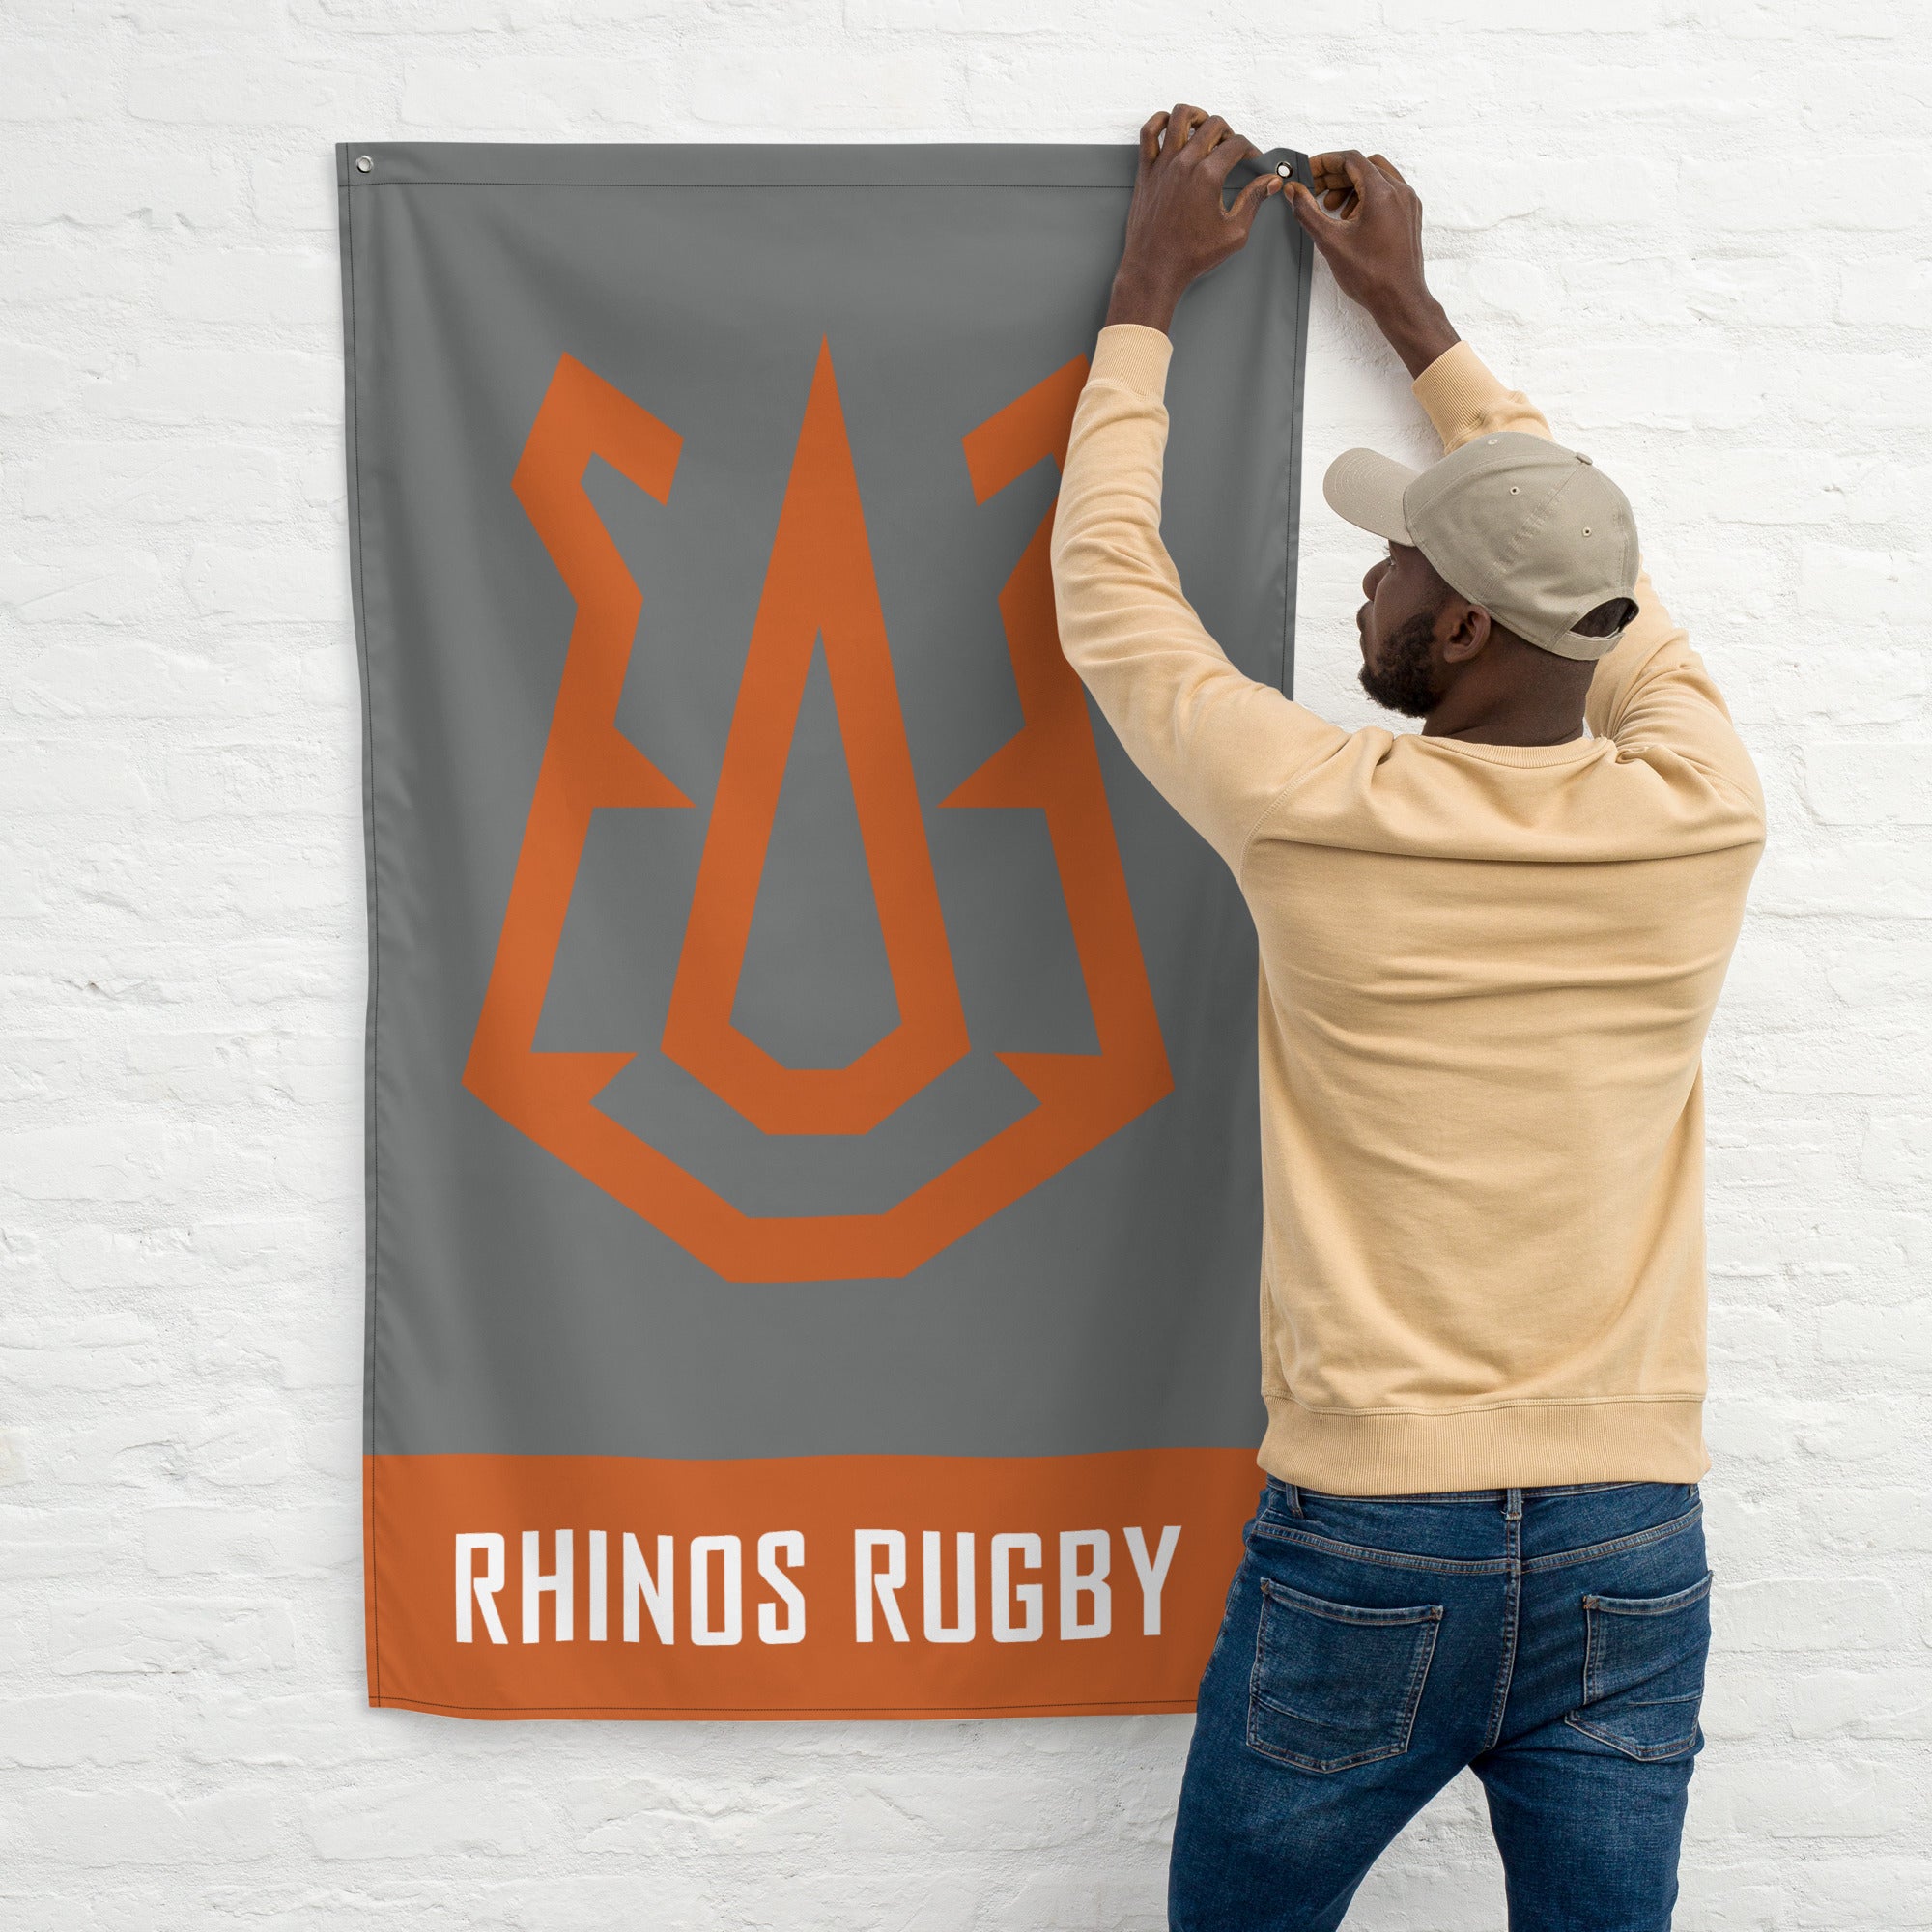 Rugby Imports Rhinos Rugby Wall Flag